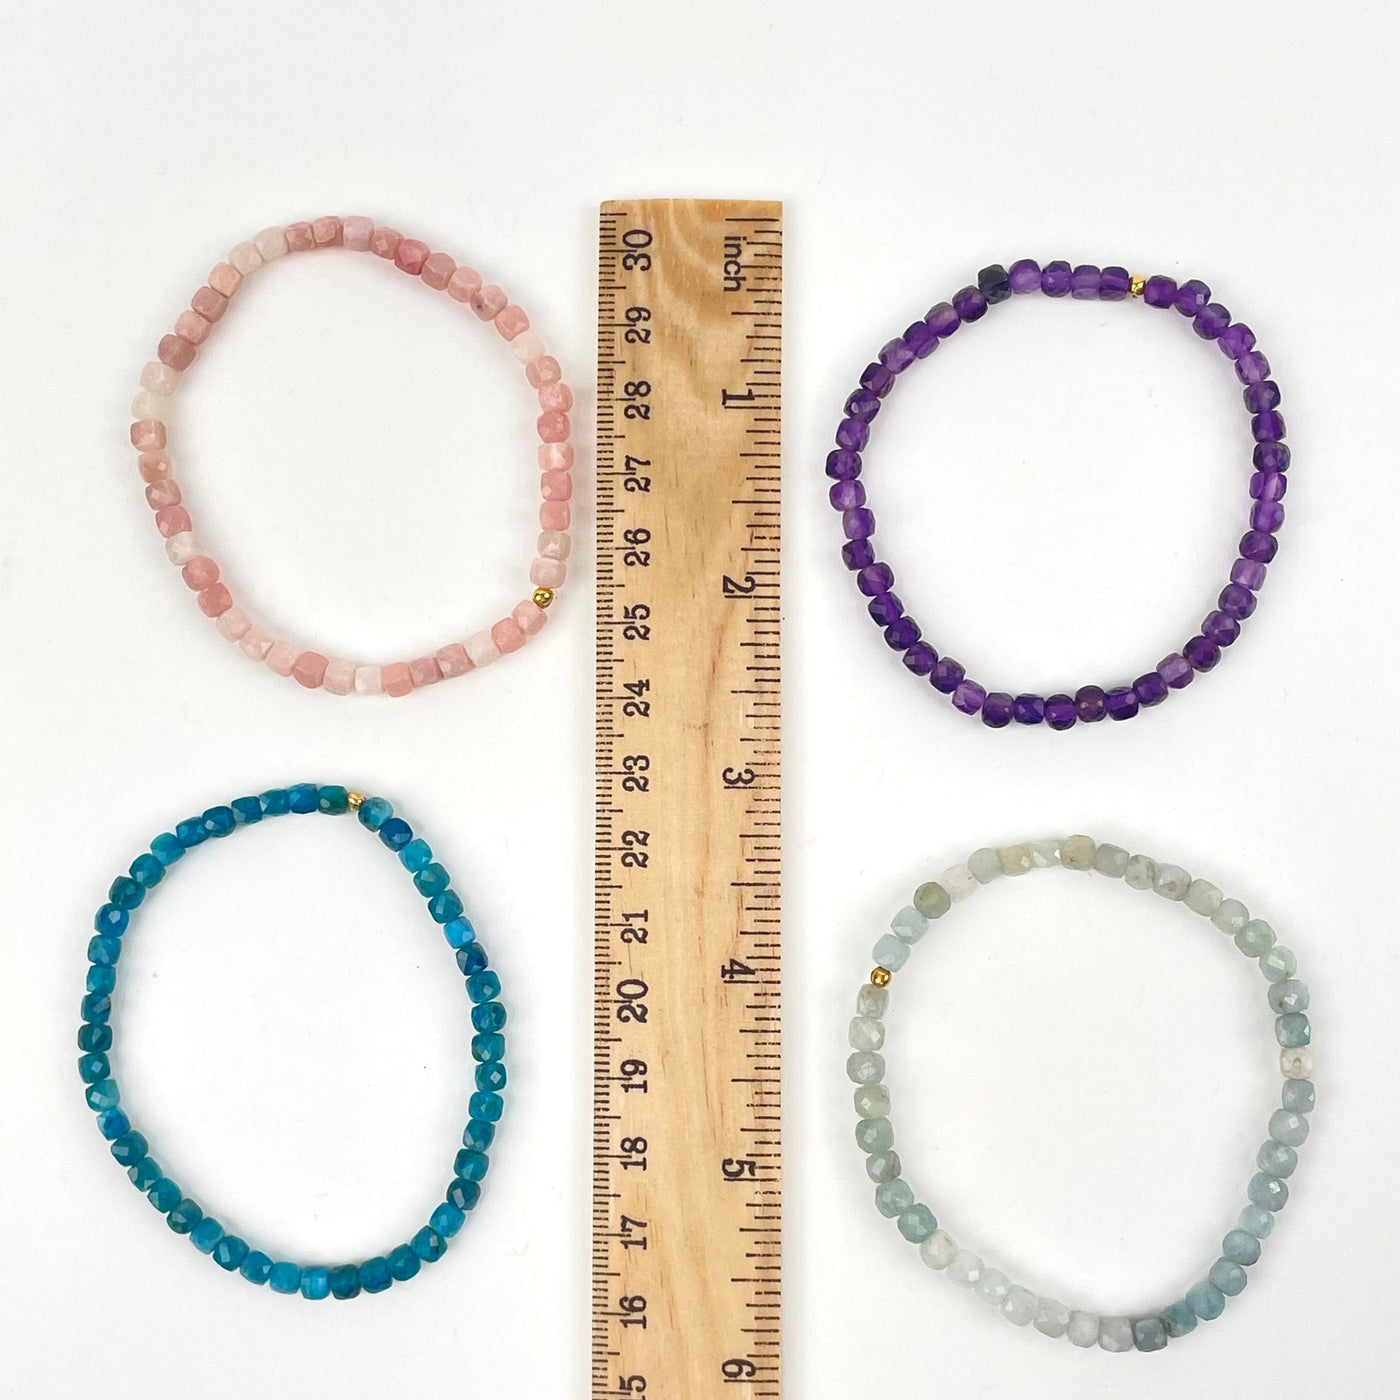 bracelets next to a ruler for size reference 